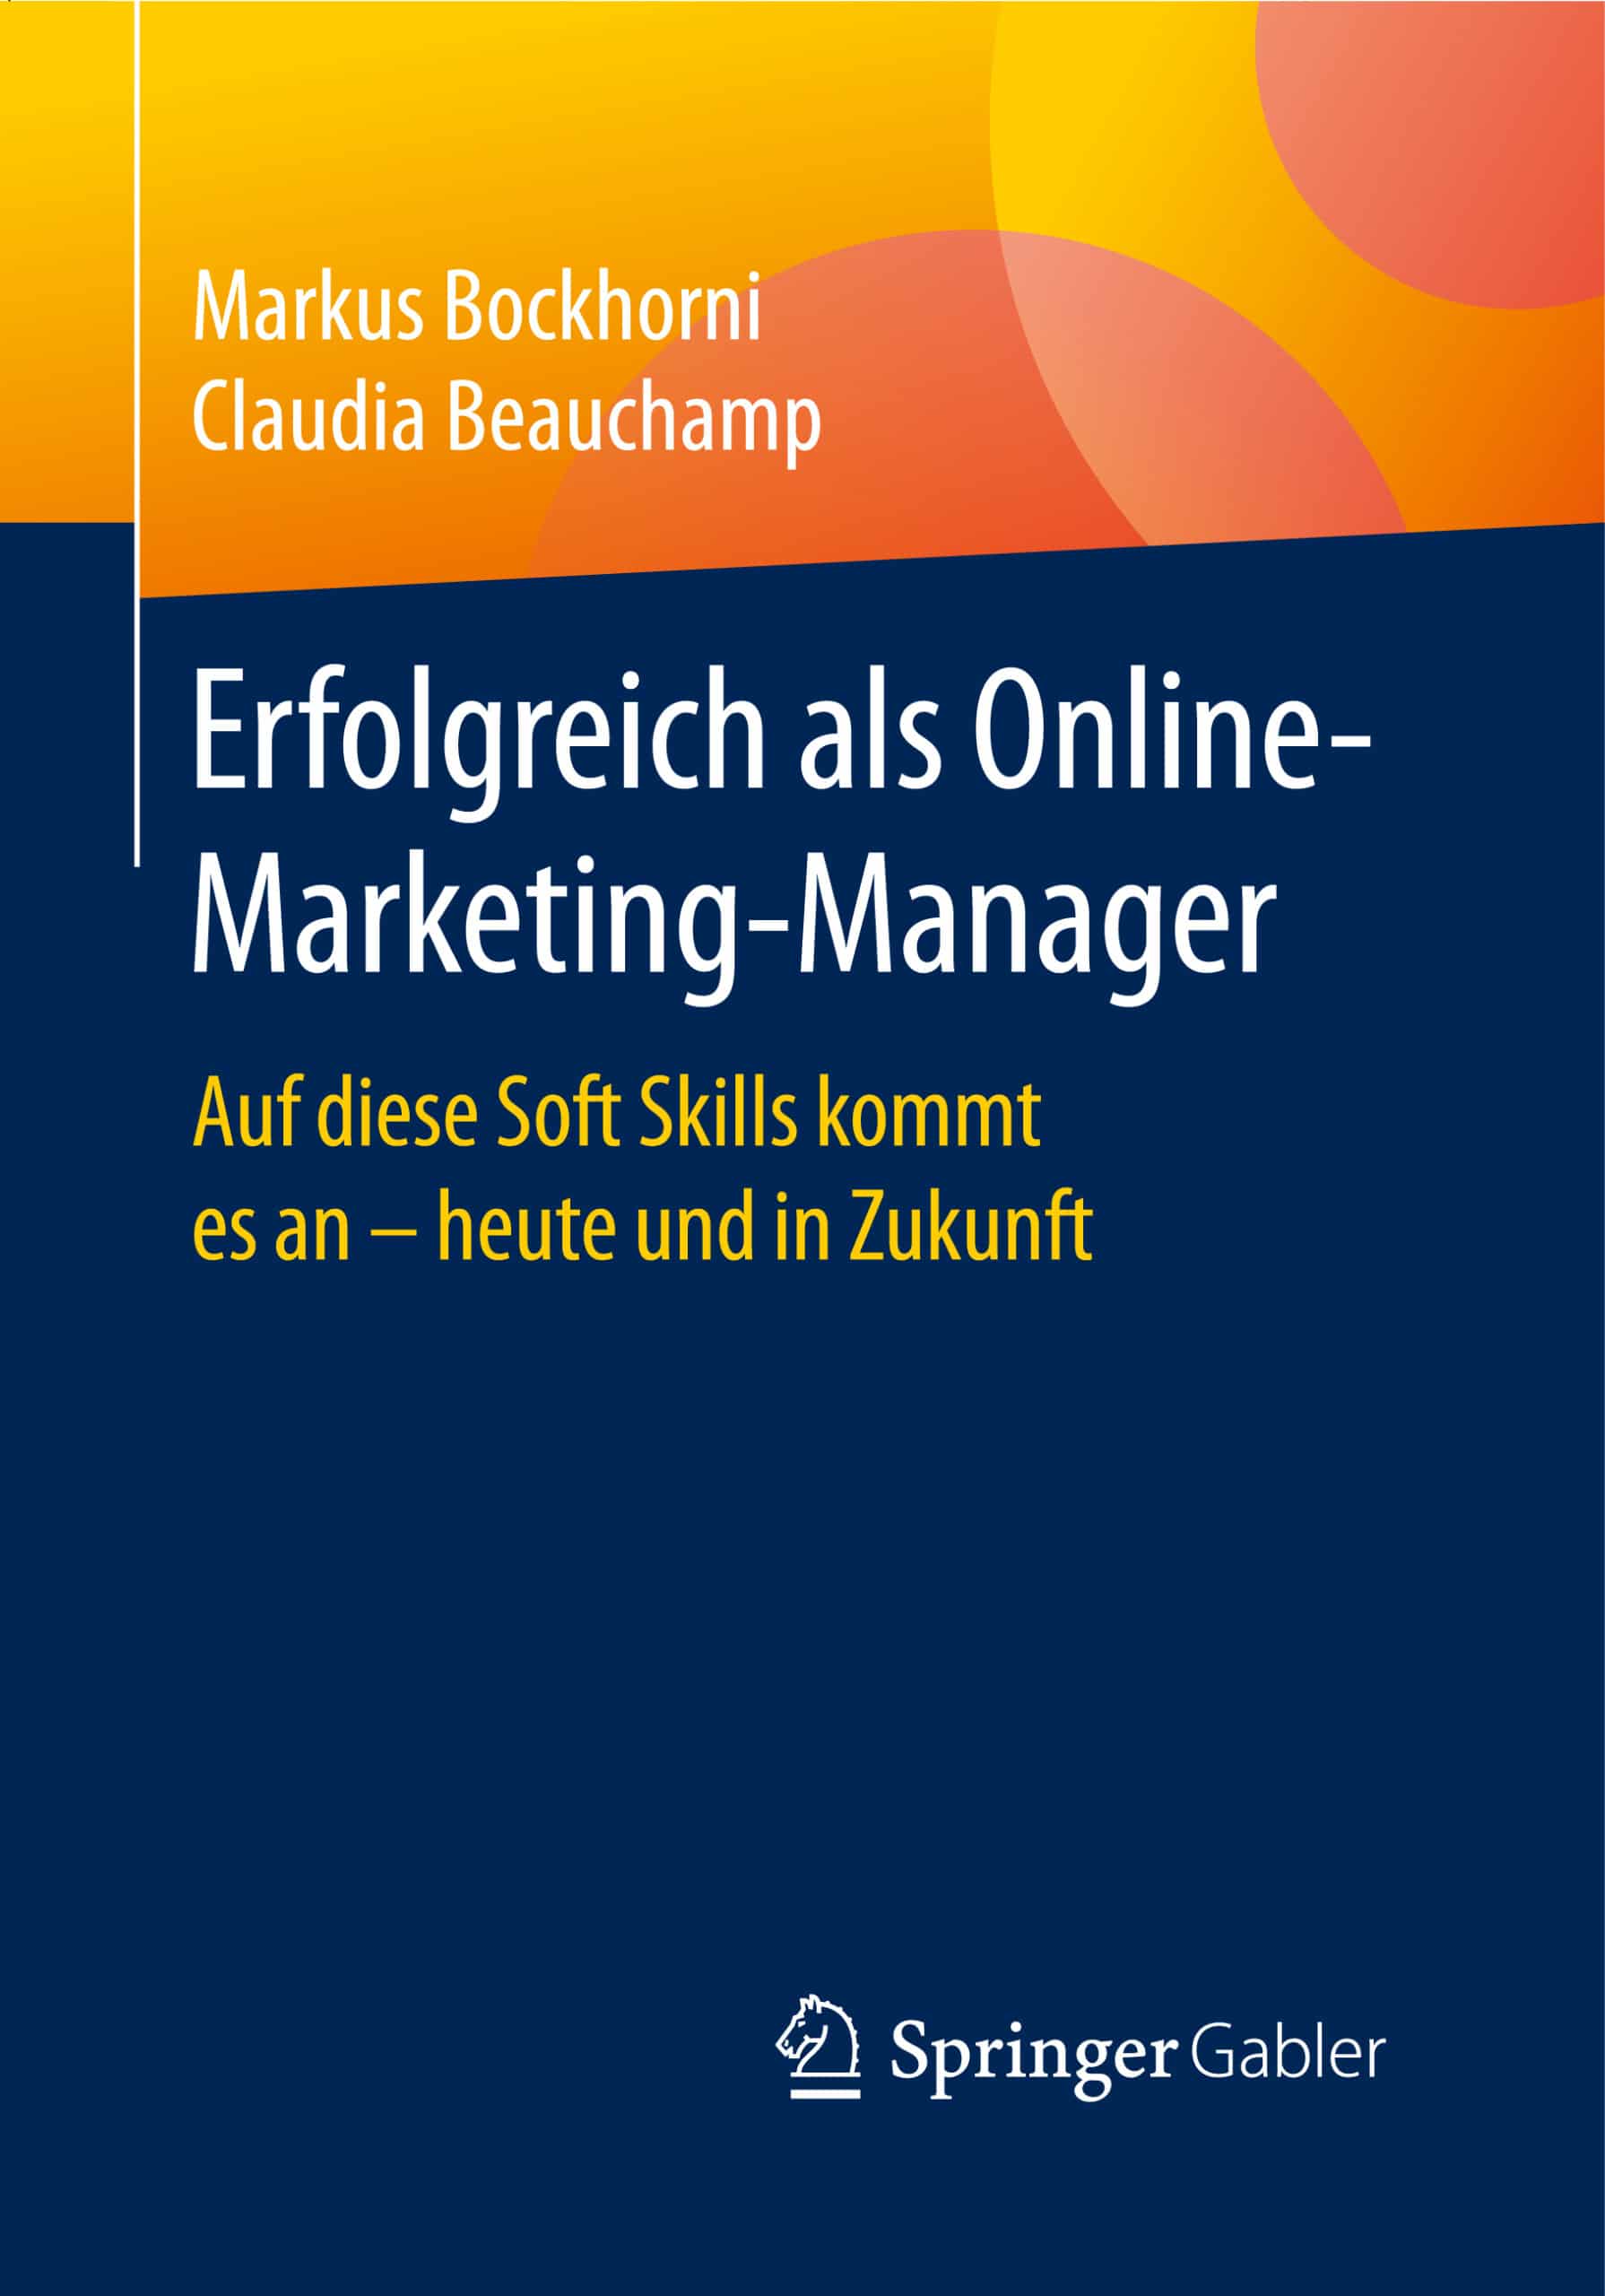 Erfolgreich als Online-Marketing-Manager, Markus Bockhorni, Claudia Beauchamp